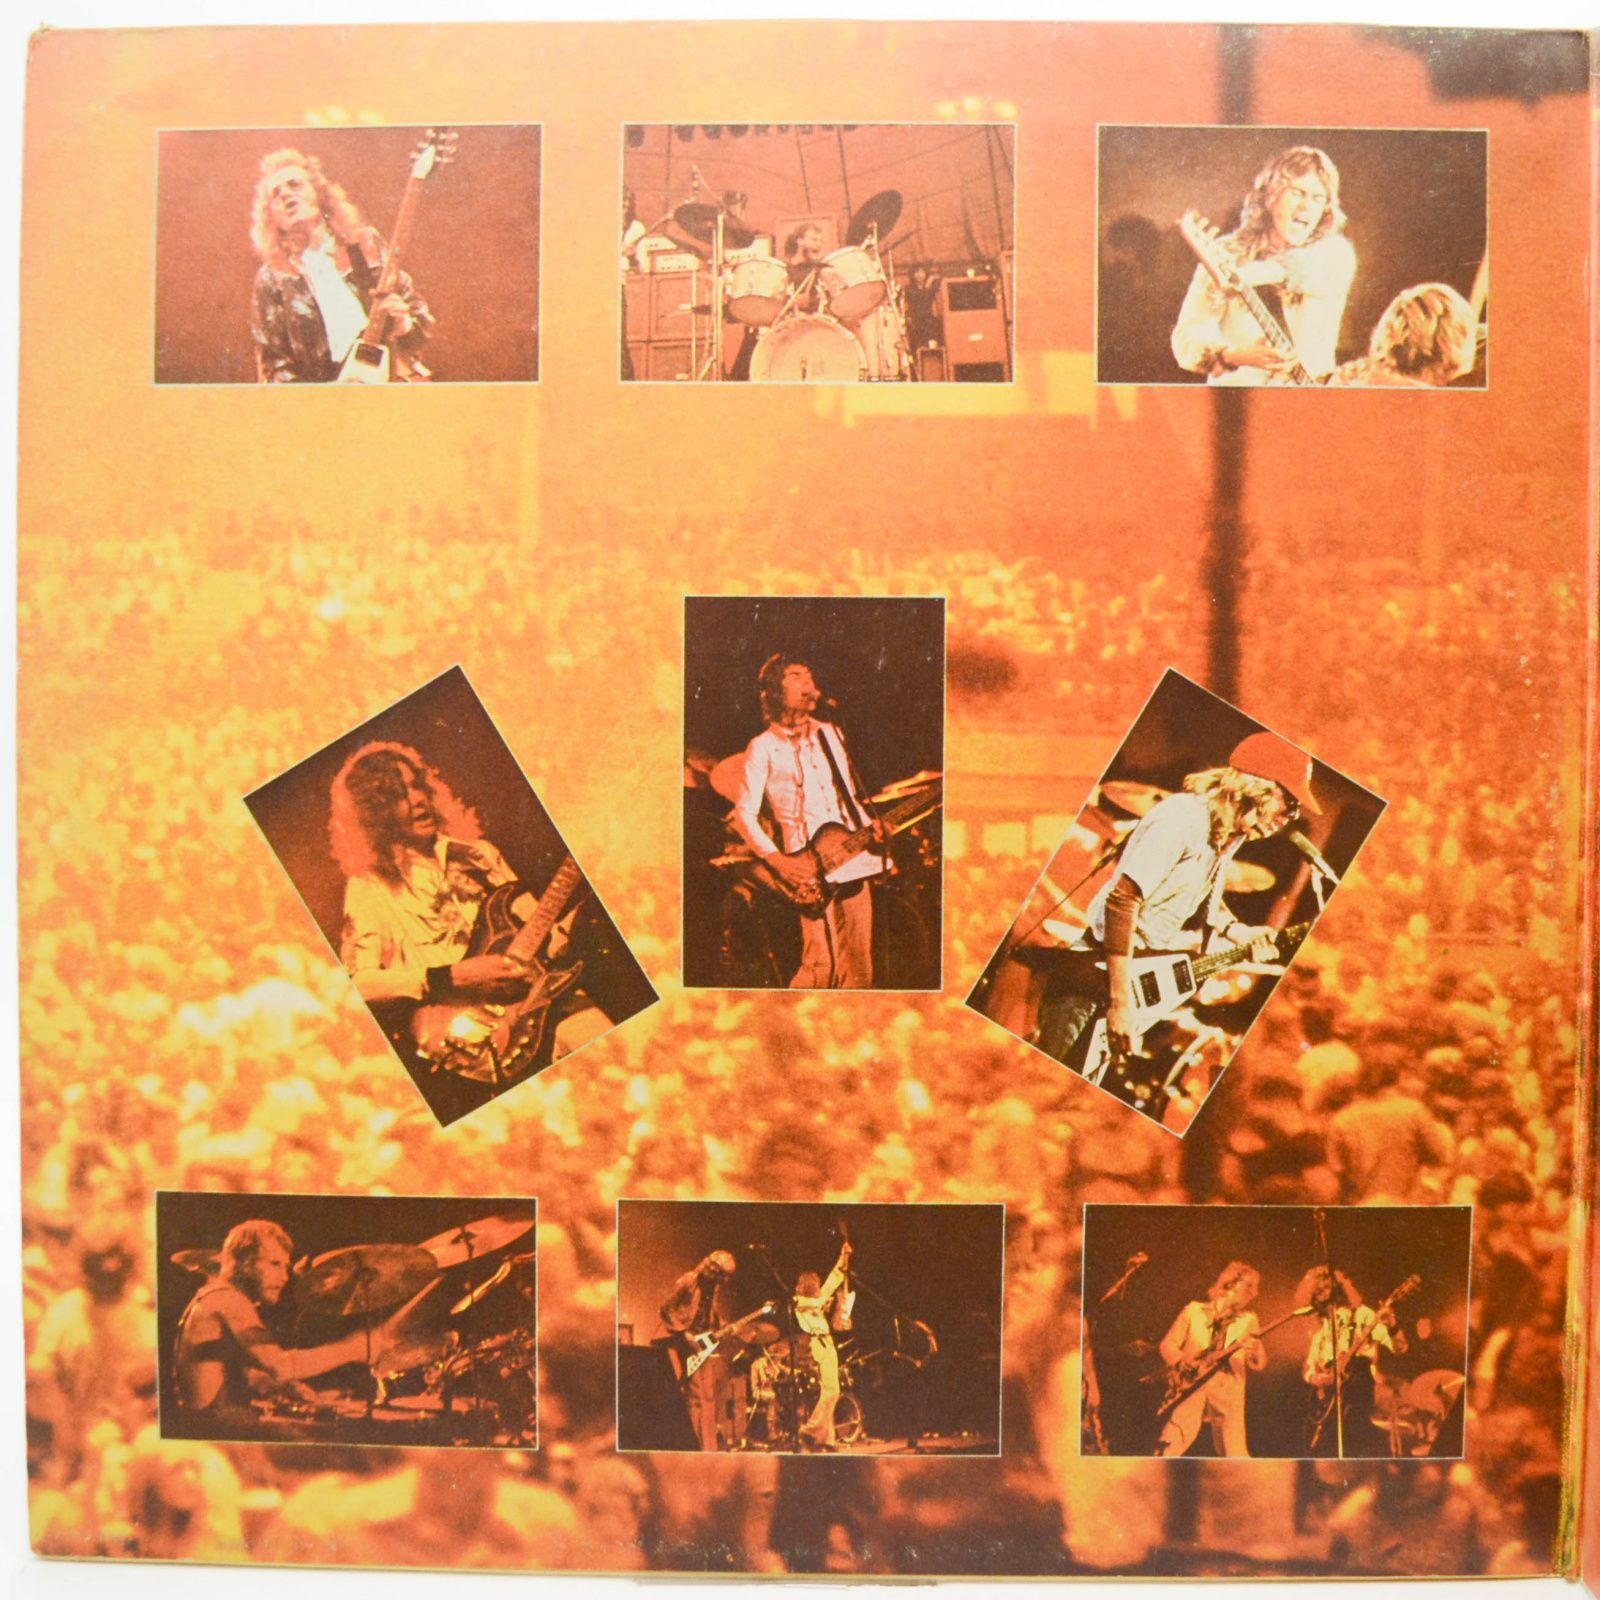 Wishbone Ash — Live Dates (2LP), 1973